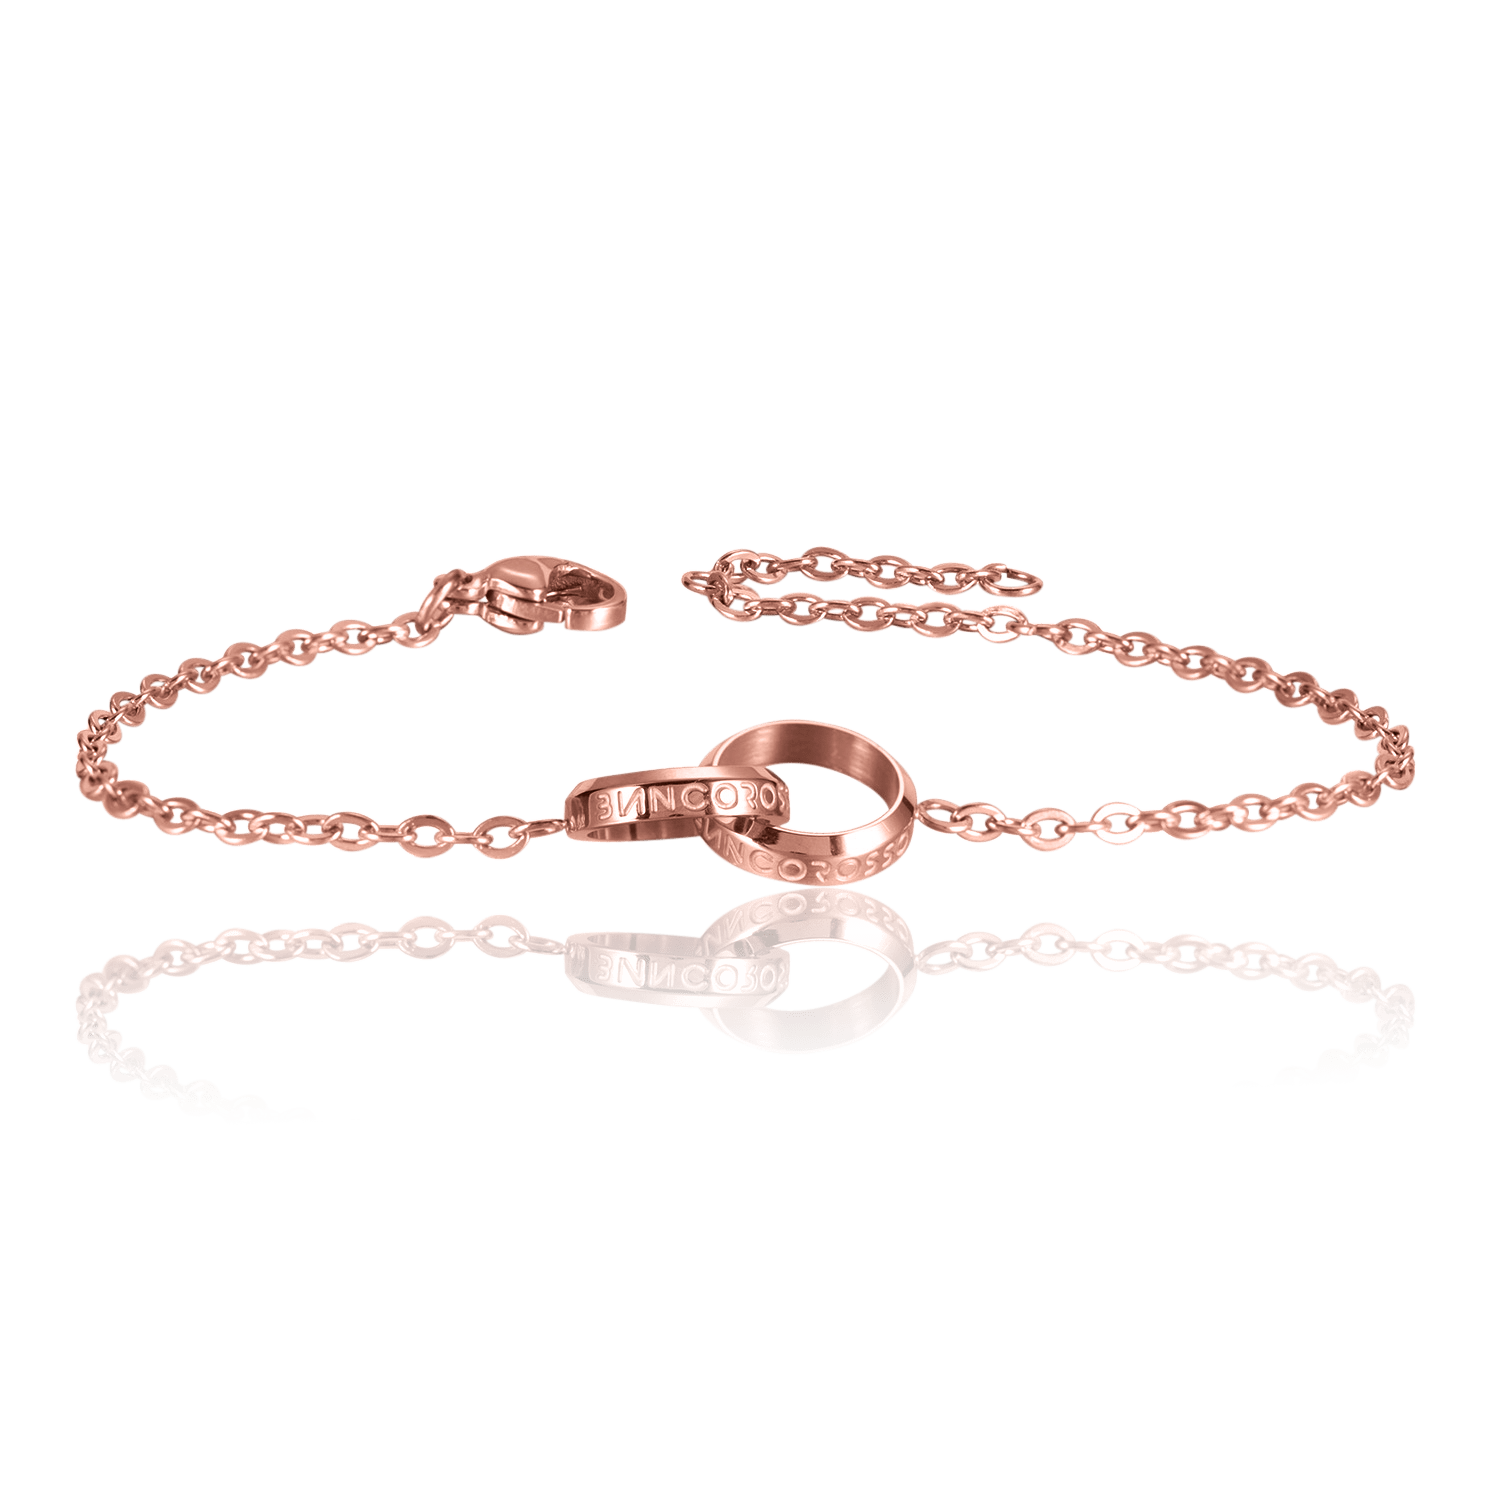 bianco rosso Bracelets To My Aunt - Eternity Bracelet cyprus greece jewelry gift free shipping europe worldwide